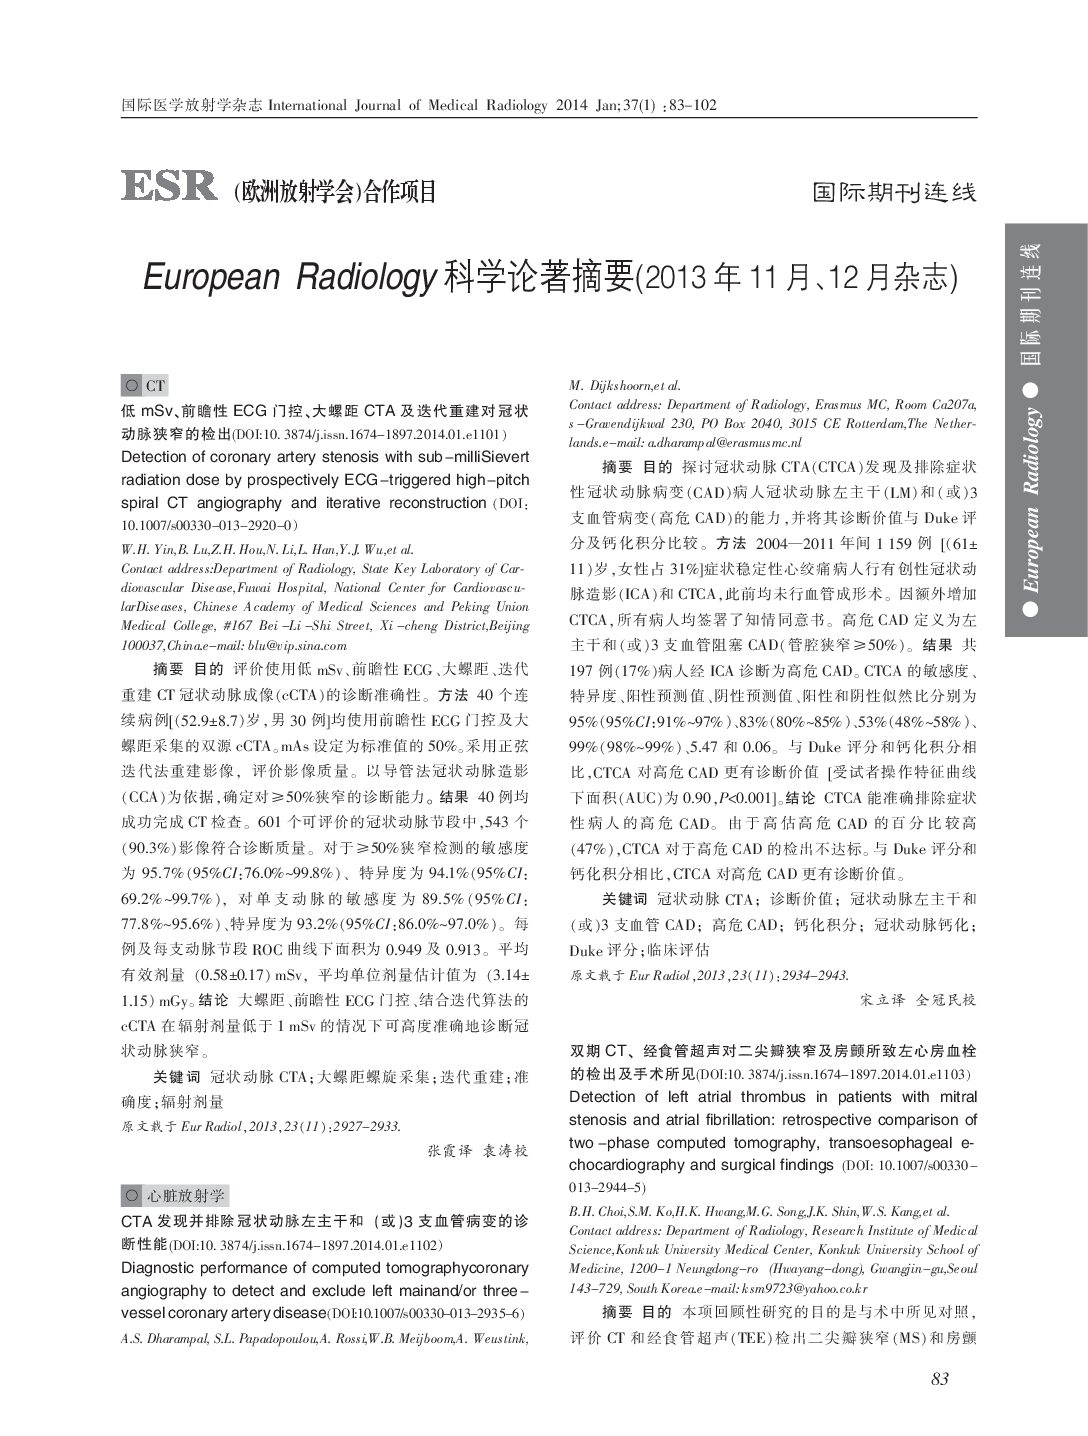 European Radiology Vol. 2013, November-December (1,6 MB)